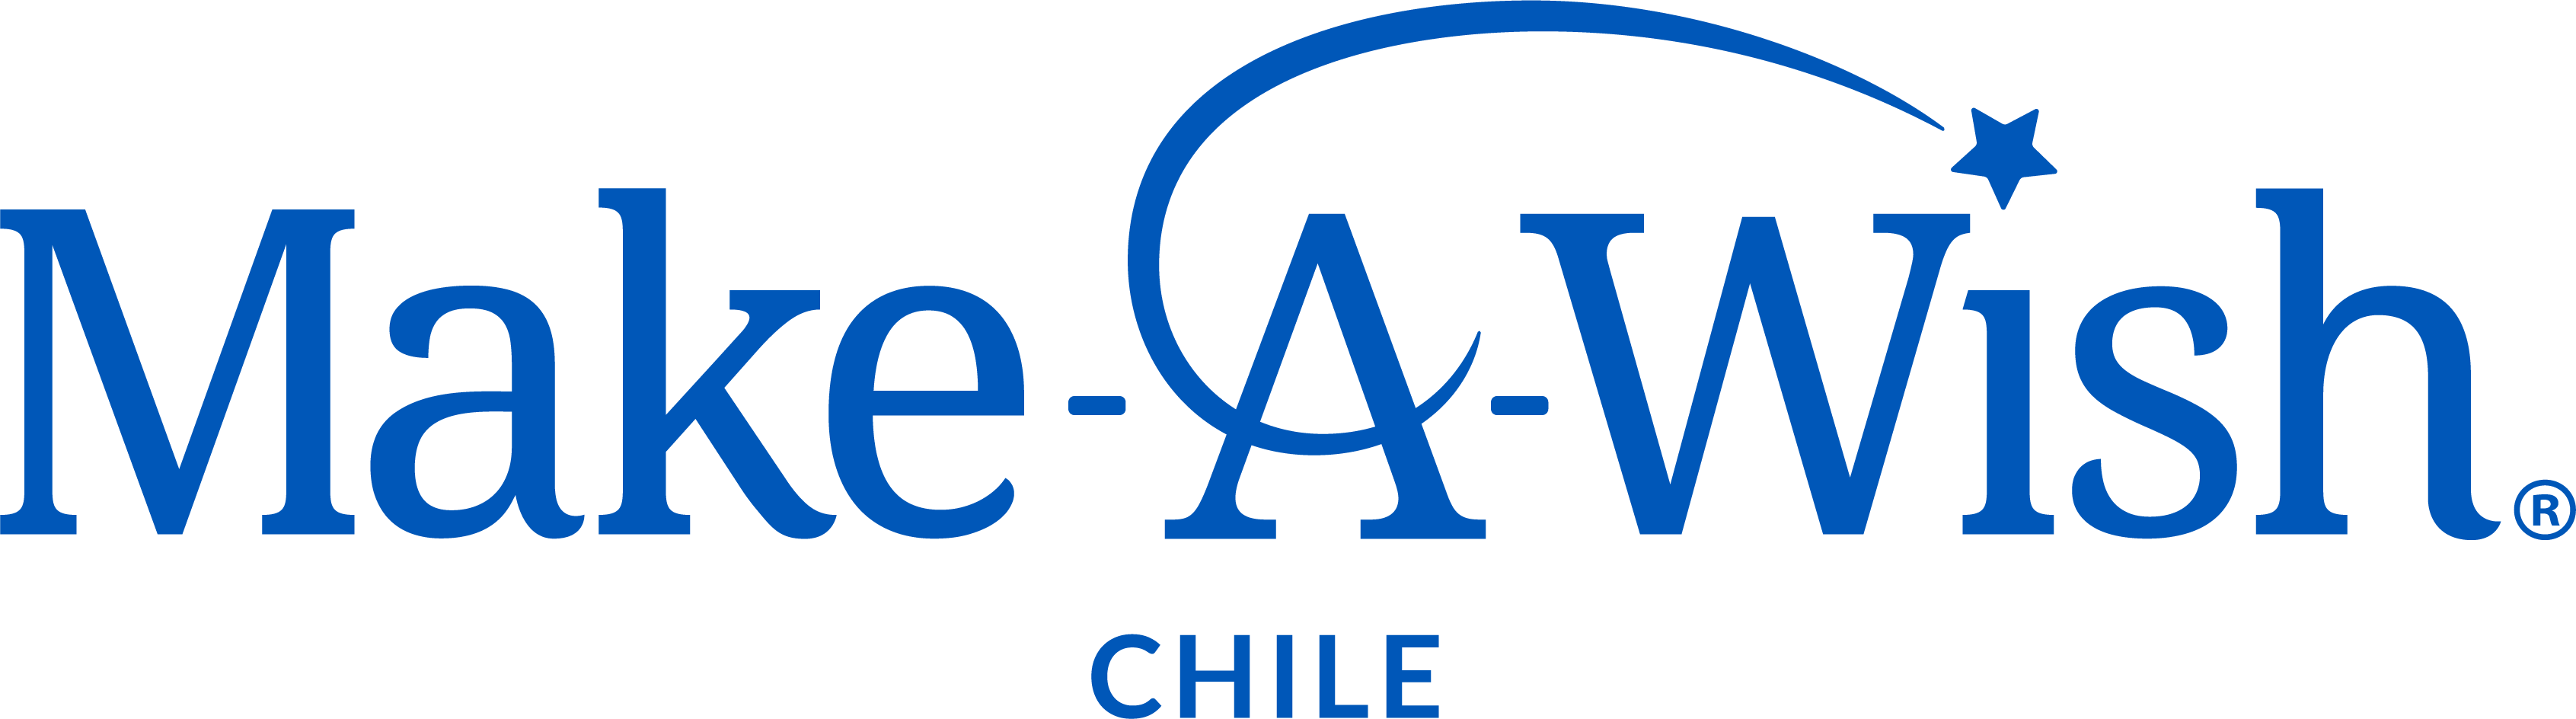 Make-A-Wish Argentina logo